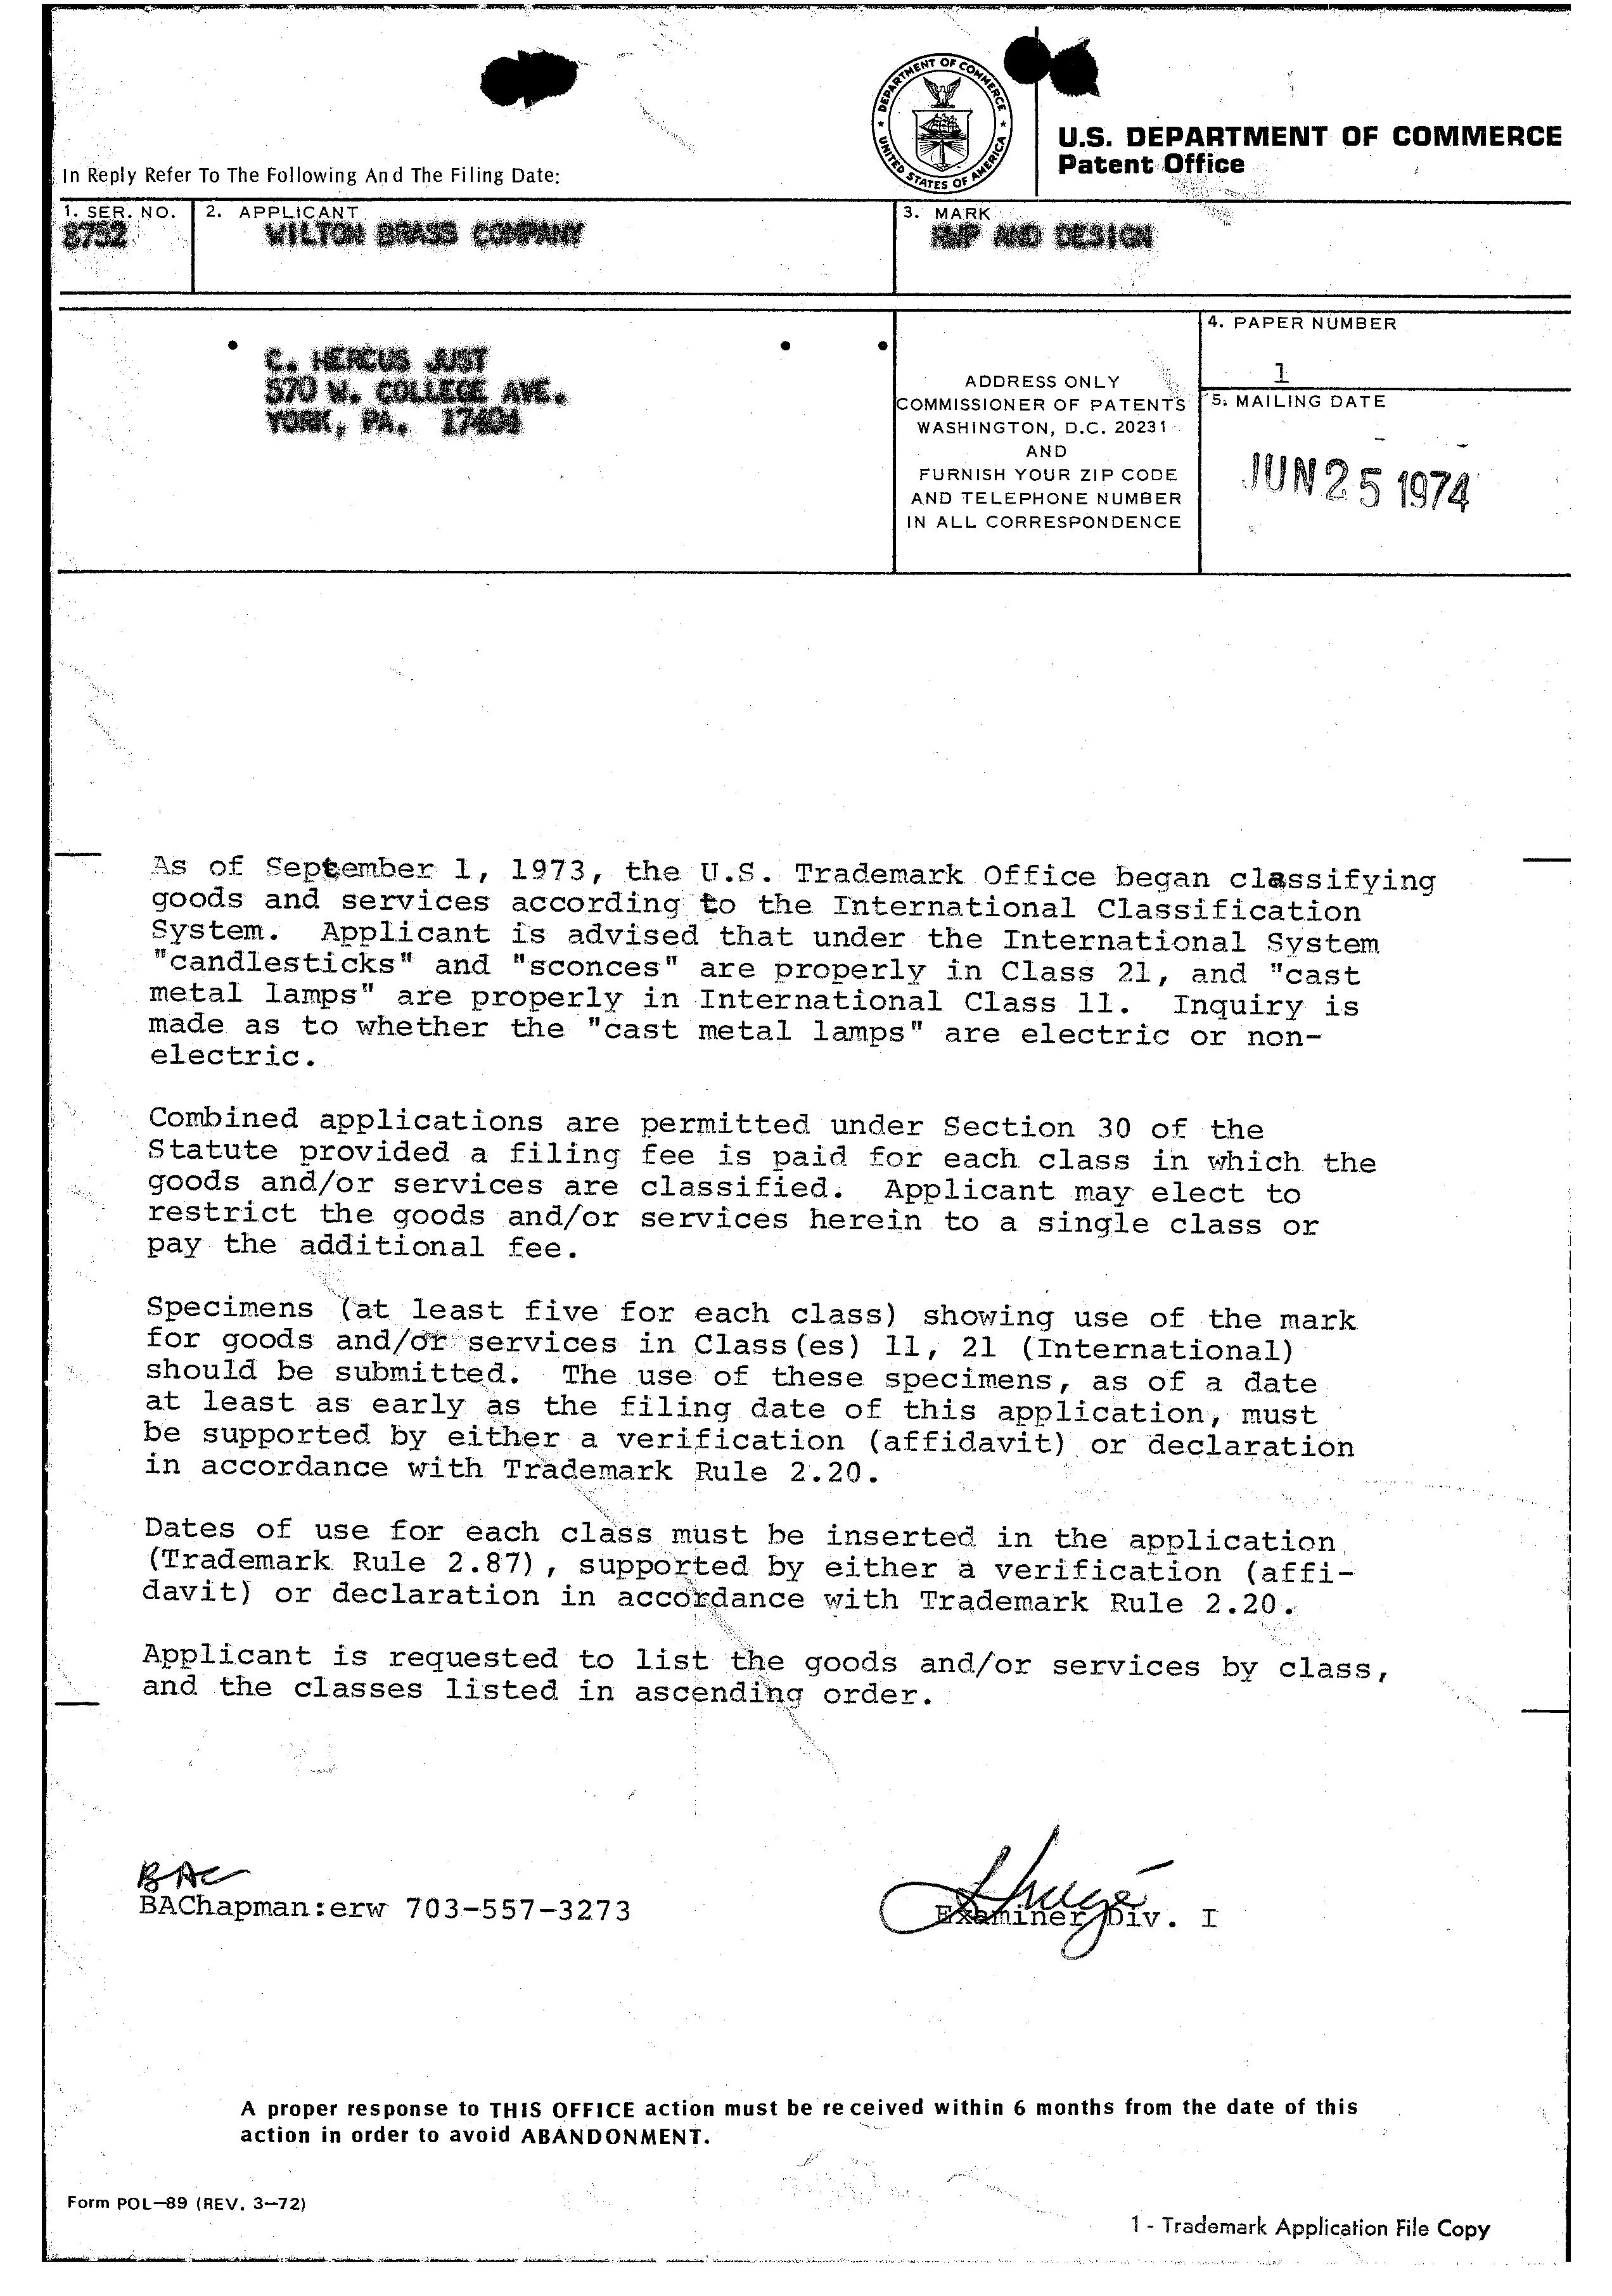 Neiman Marcus' Receipt / Order Confirmation – 172 of 504 Receipt